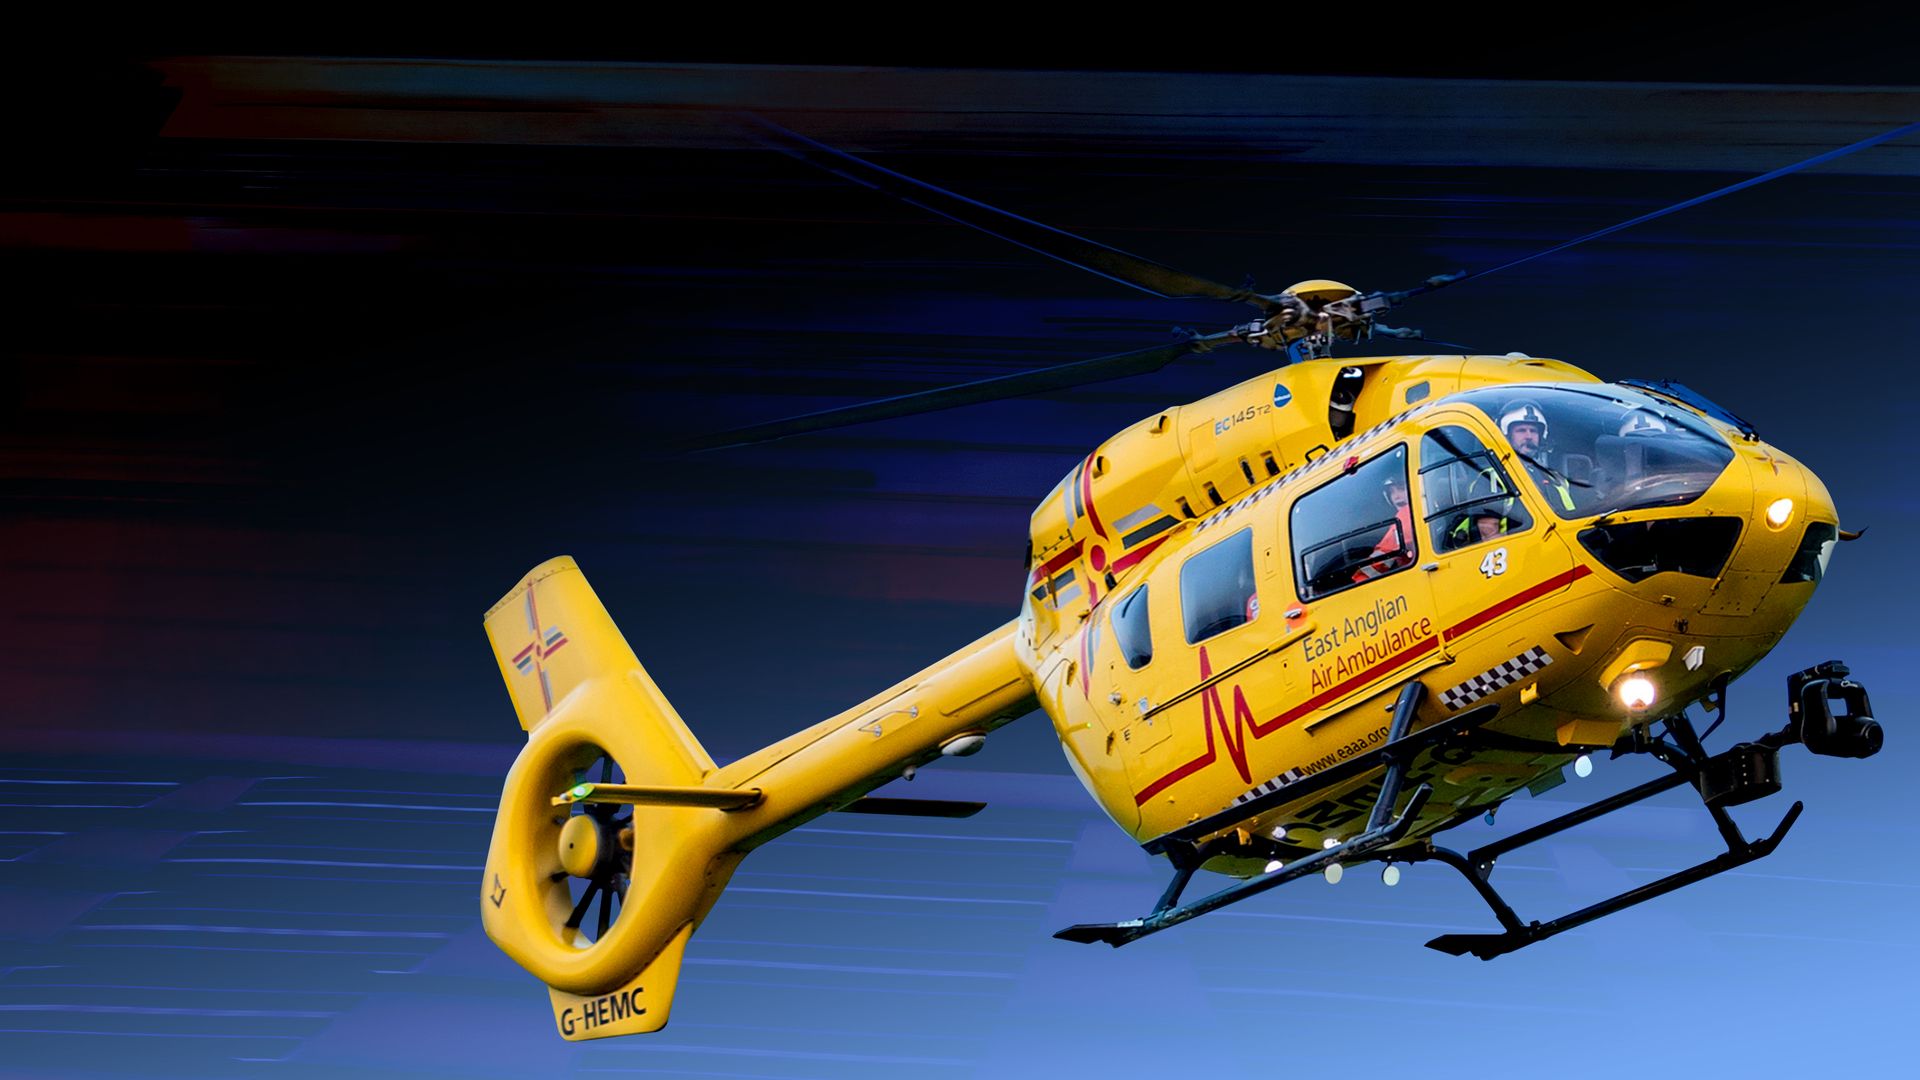 Emergency Helicopter Medics 4K